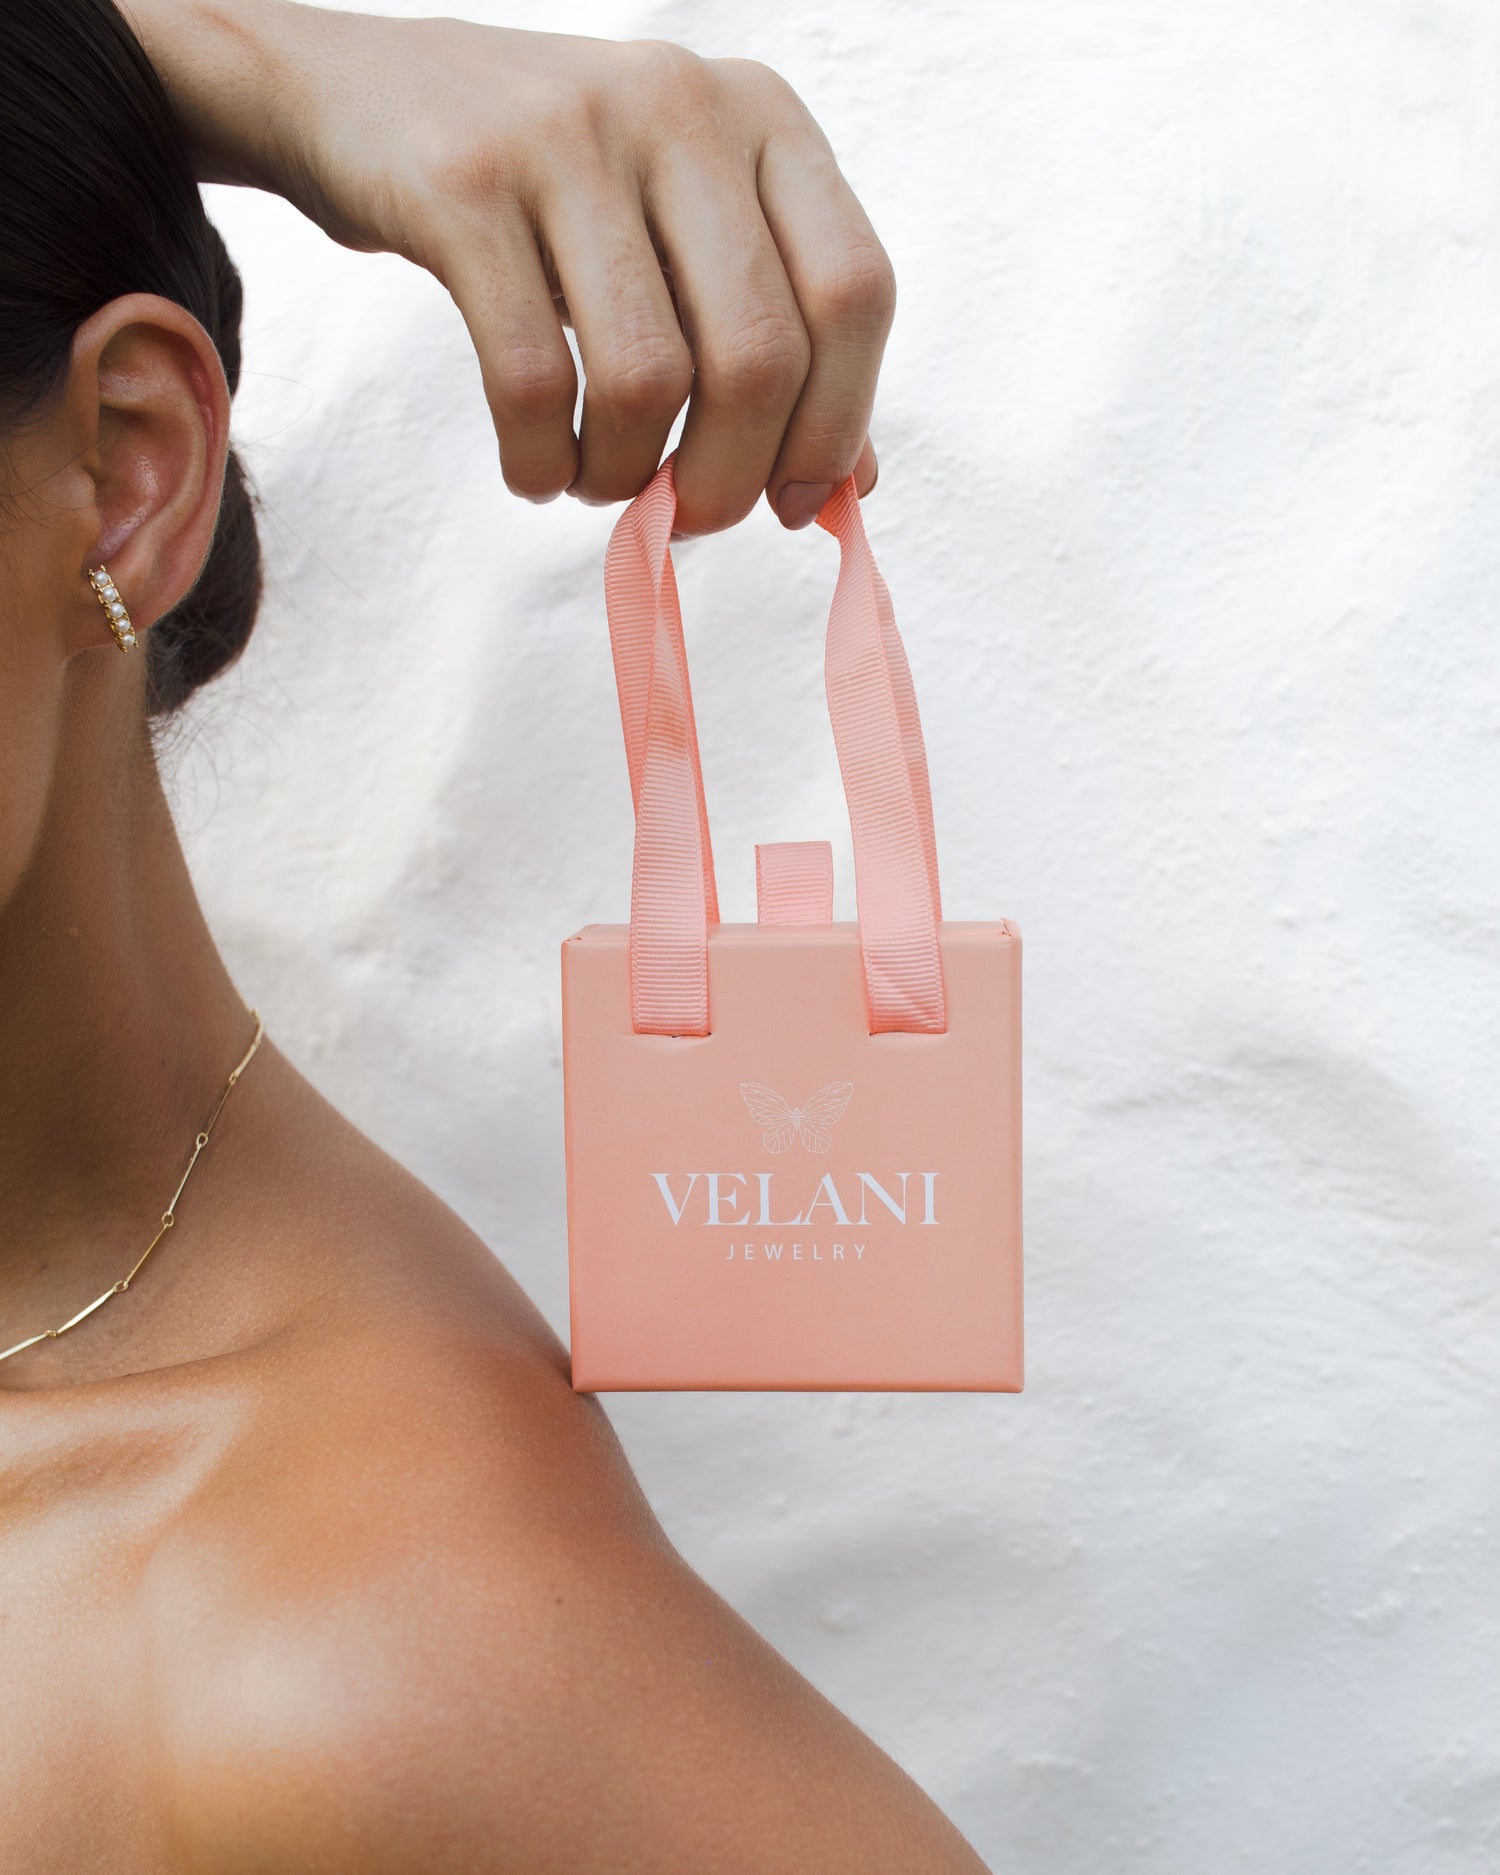 Velani Jewelry Gift Card